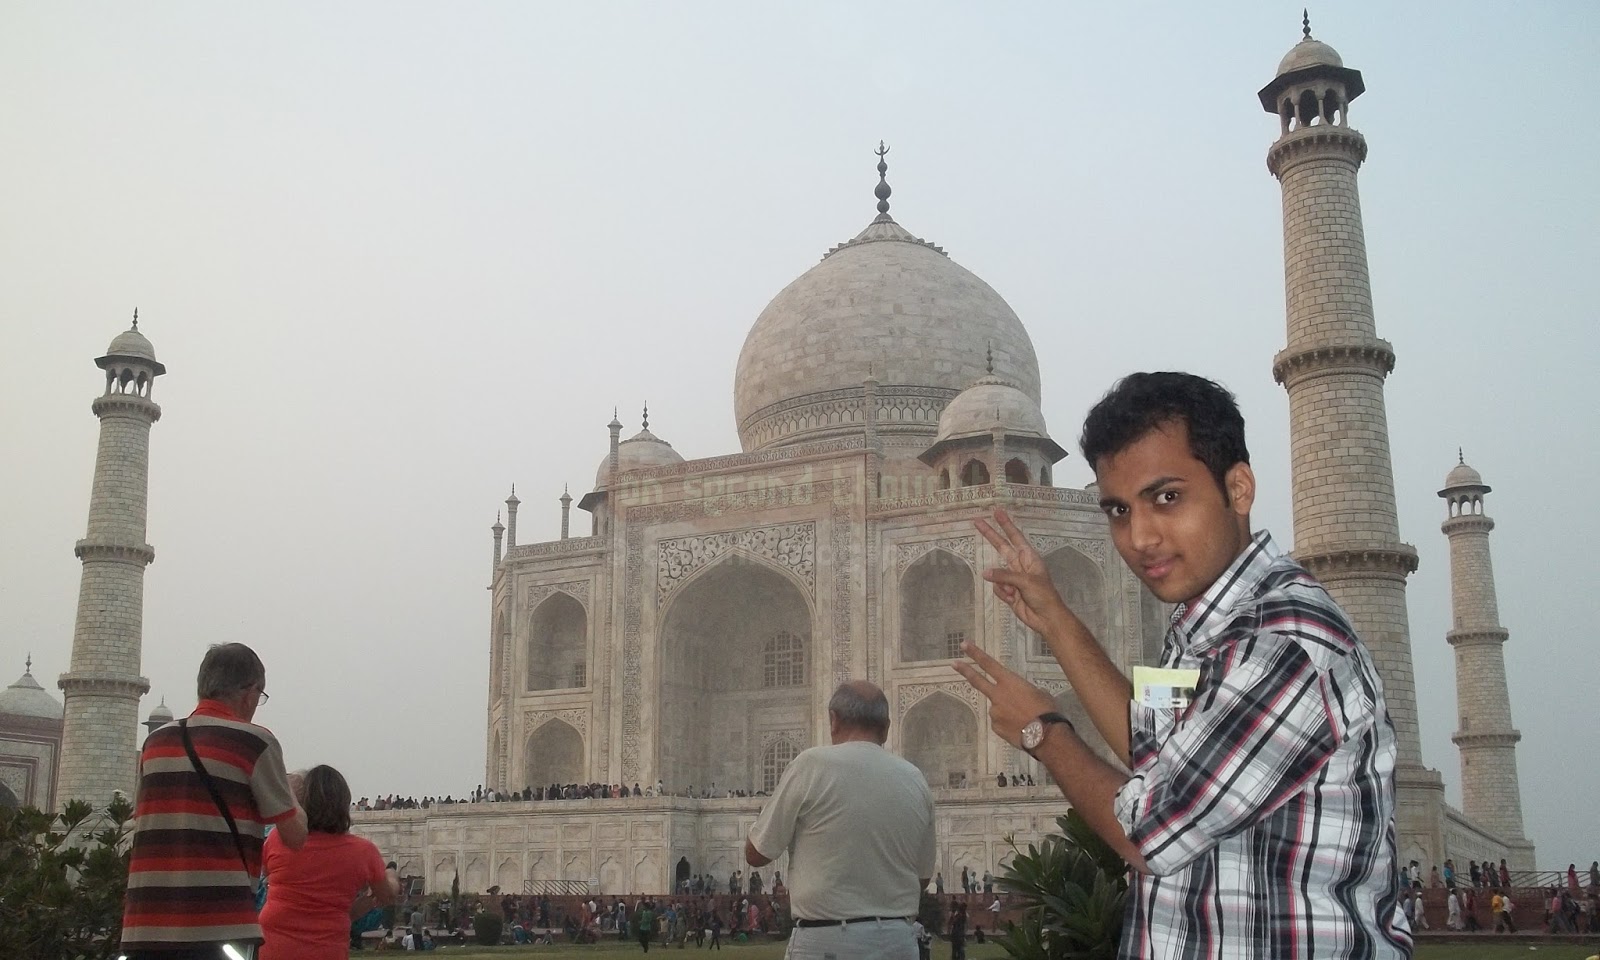 Dawn to Dusk: Captured Moods of the Taj Mahal